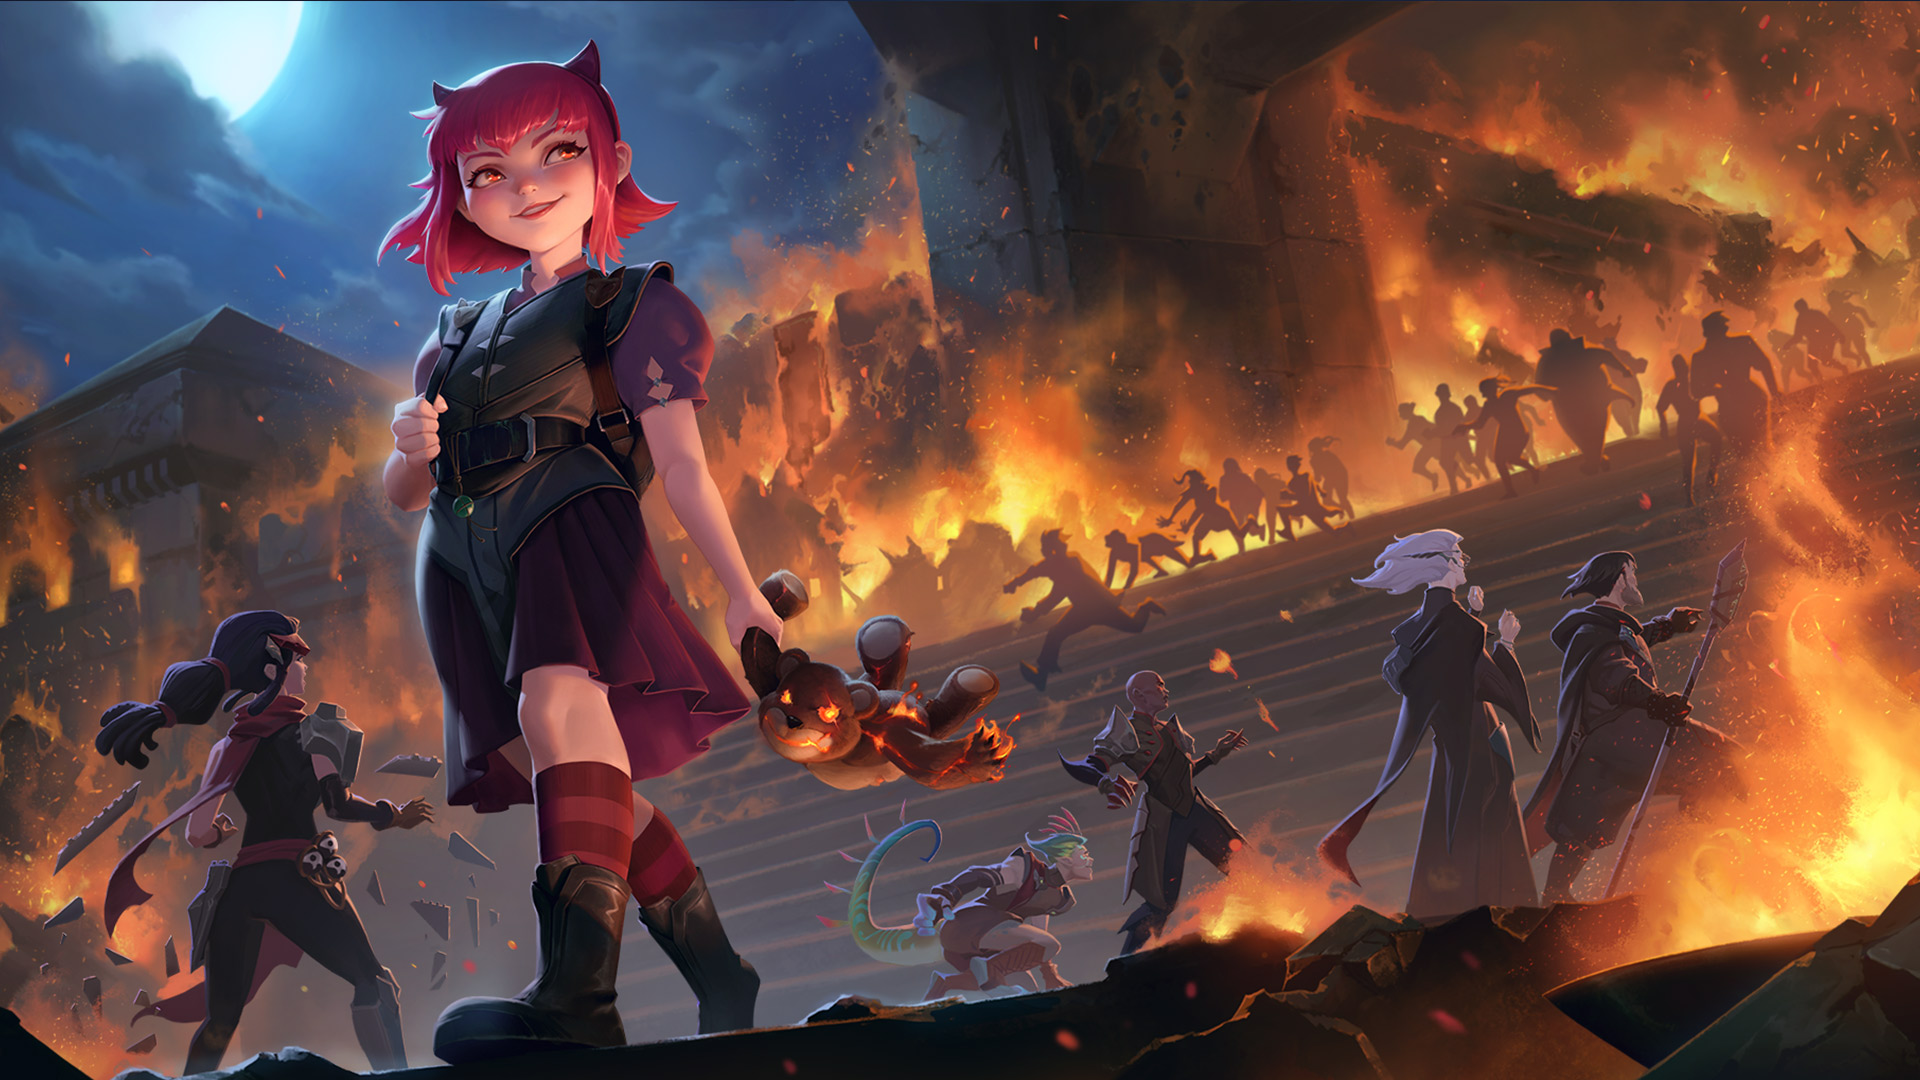 Annie walks suspiciously away from a blazing fire via Legends of Runeterra (2020), Riot Games